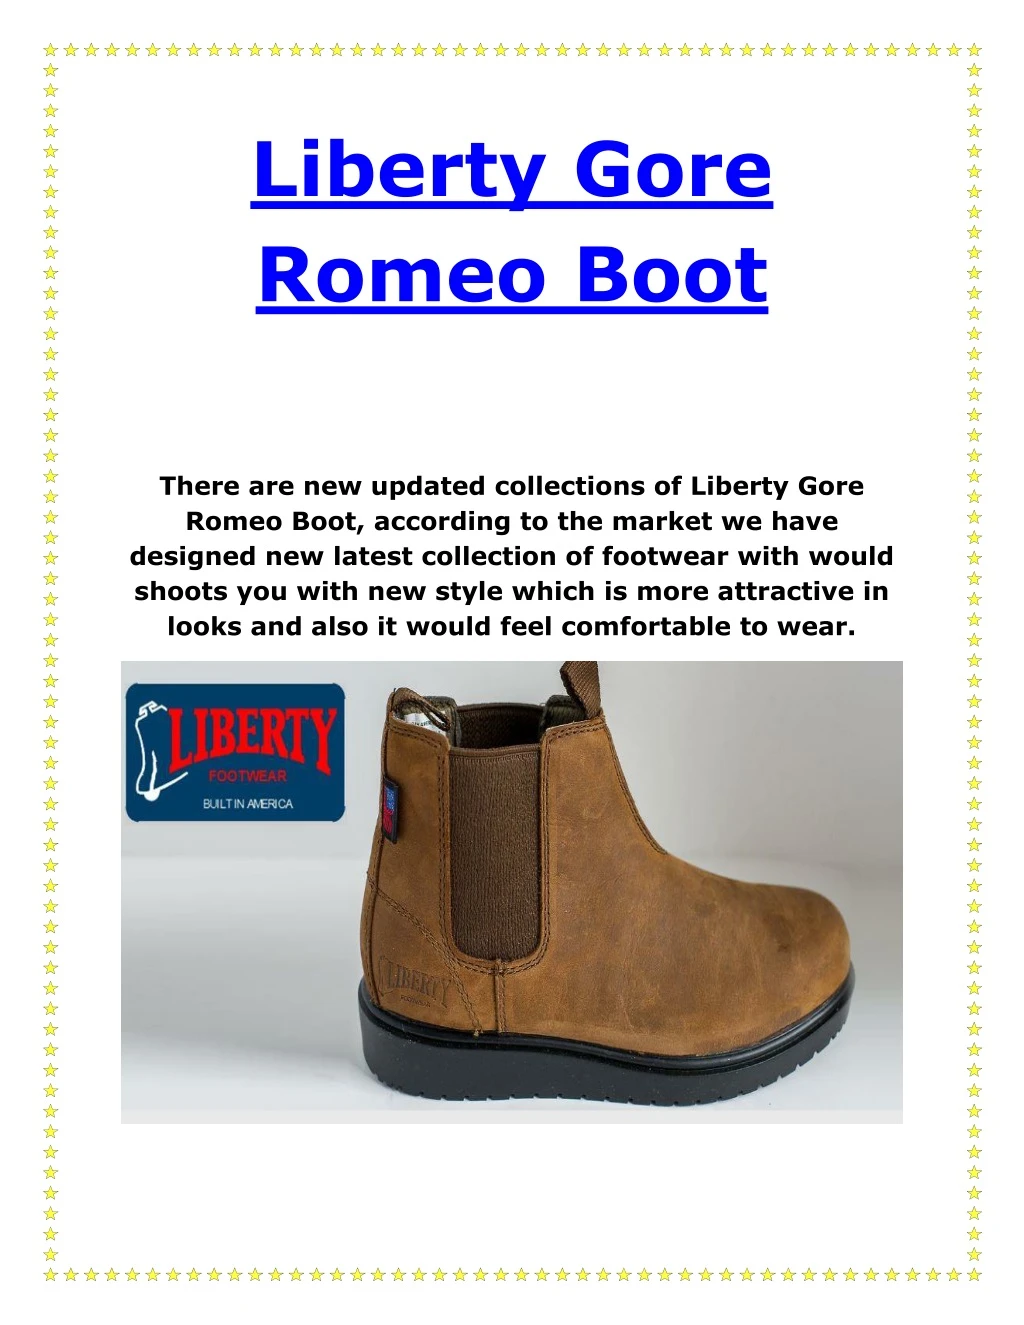 liberty gore romeo boot